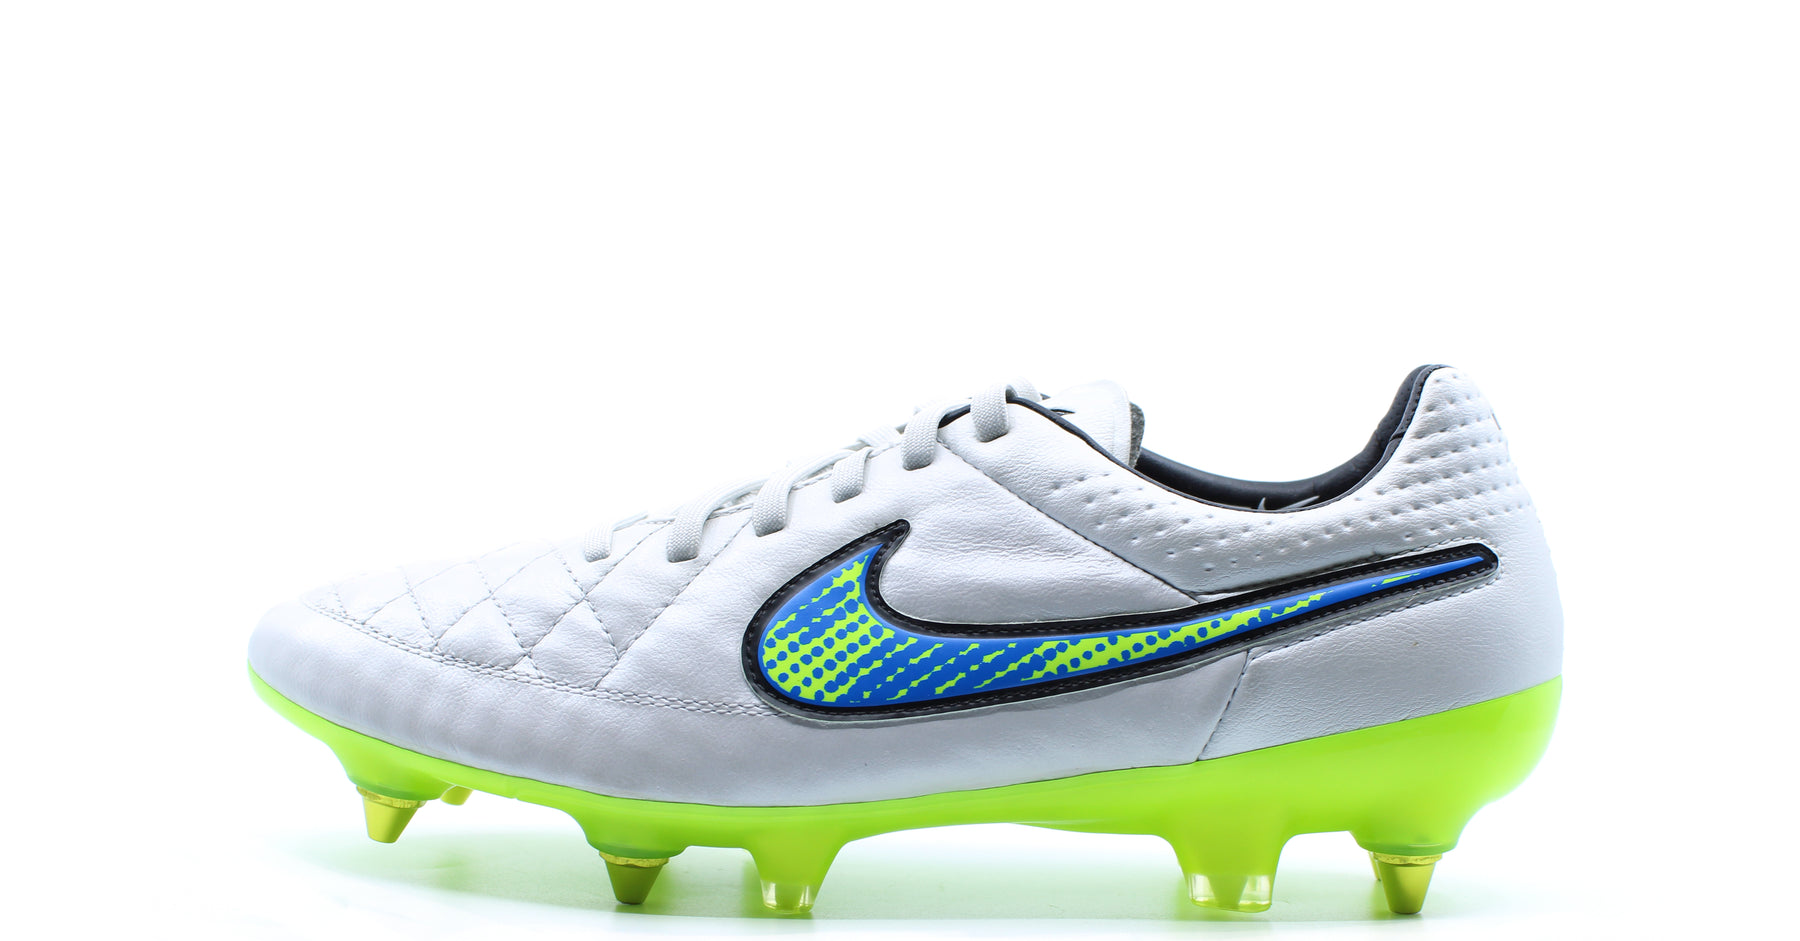 Nike Legend 5 SG Pro (631614-175) – Retro Soccer Cleats